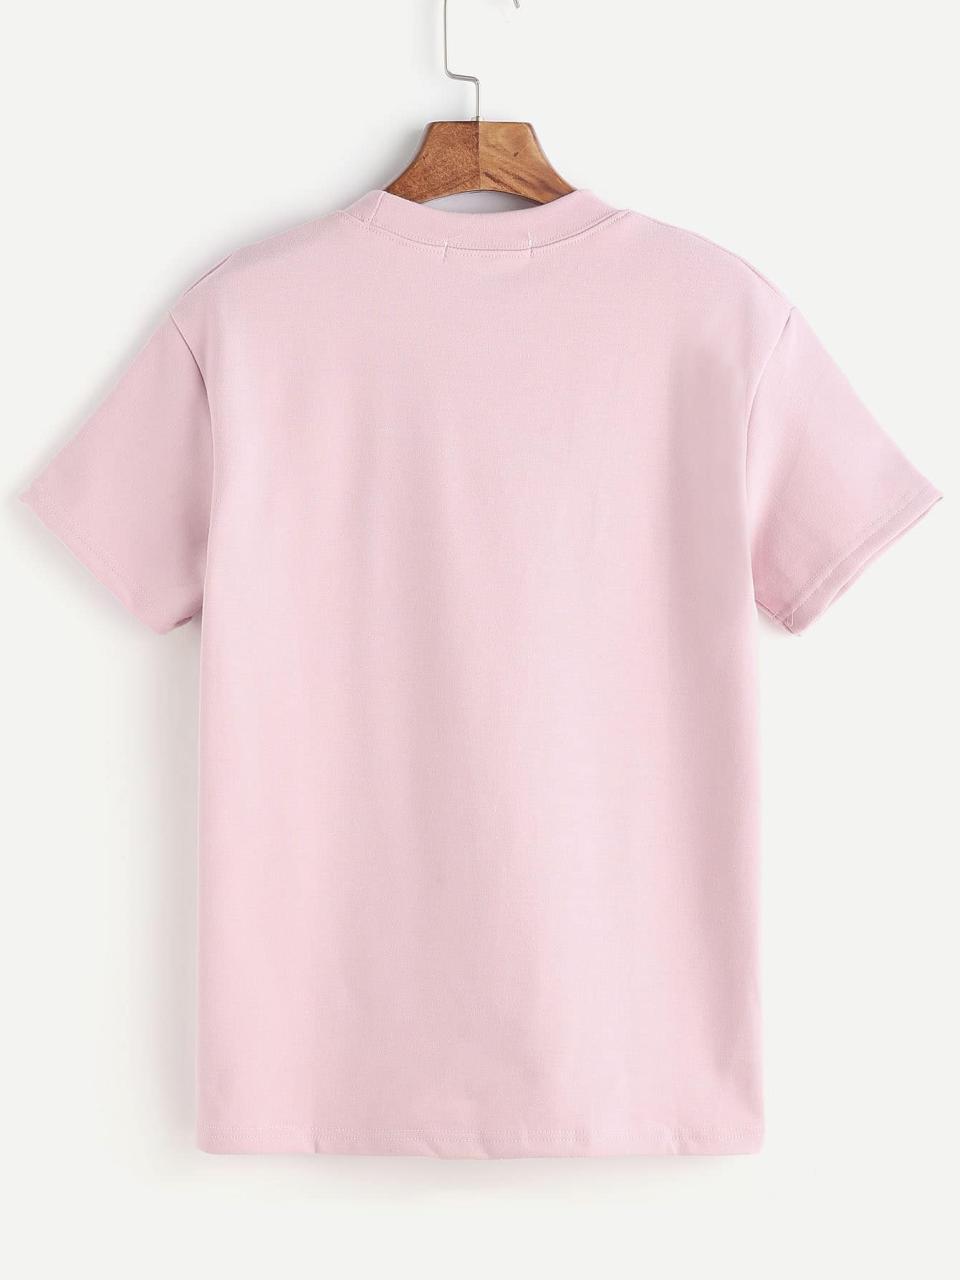 Pink Shirt Mock Up